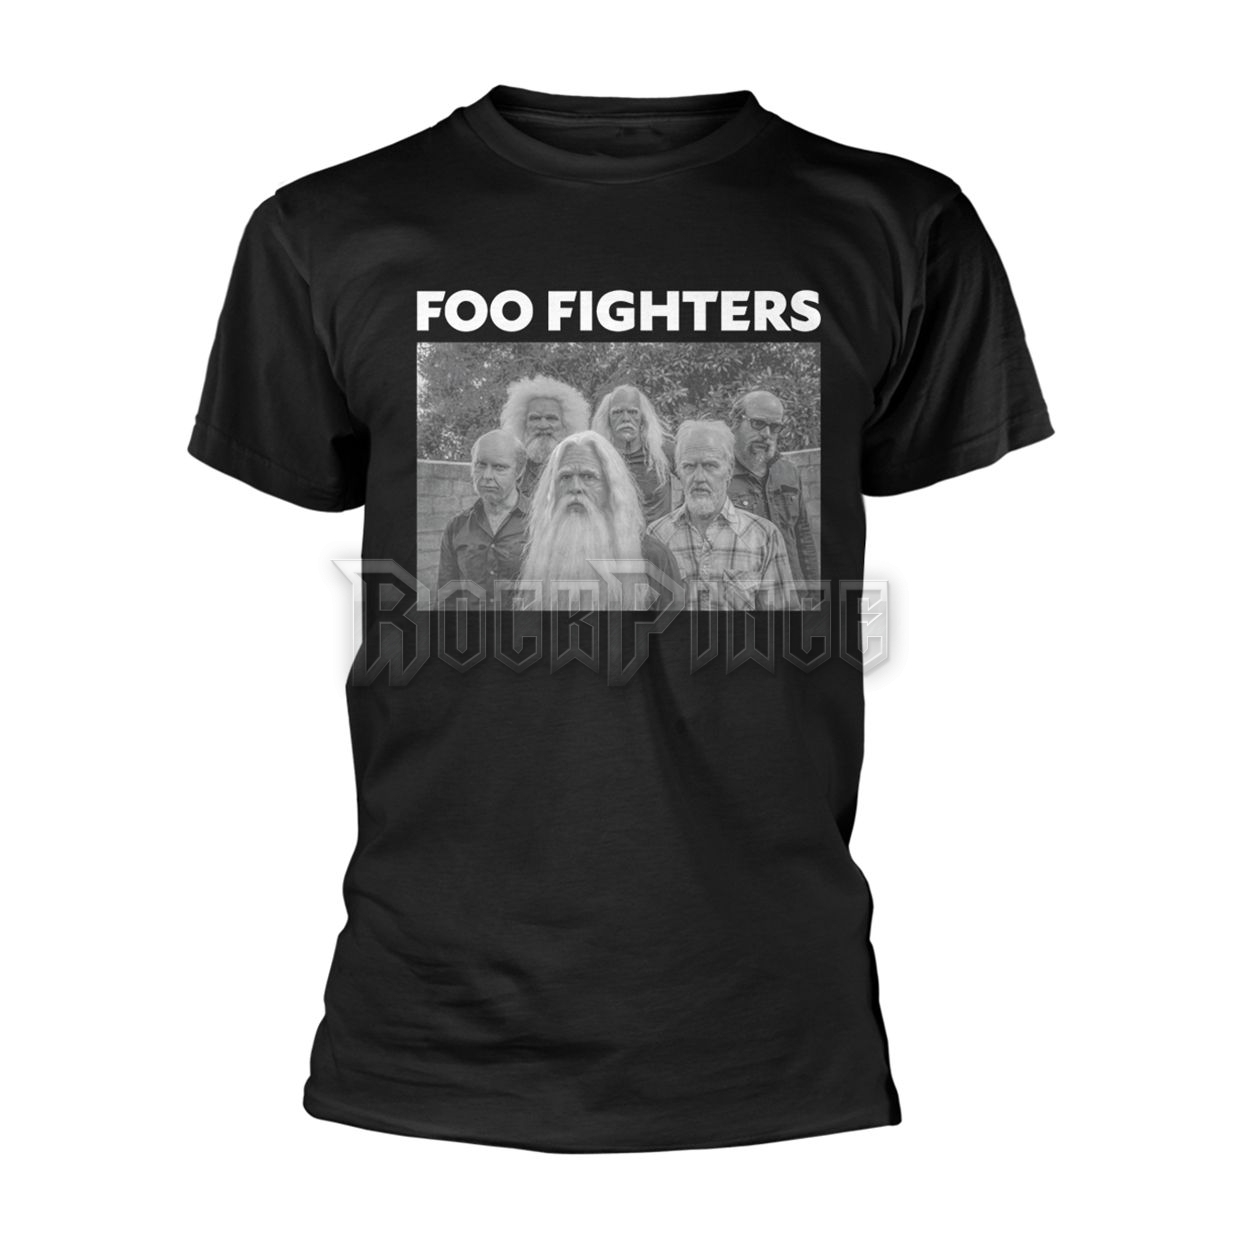 FOO FIGHTERS - OLD BAND - RTFFI108